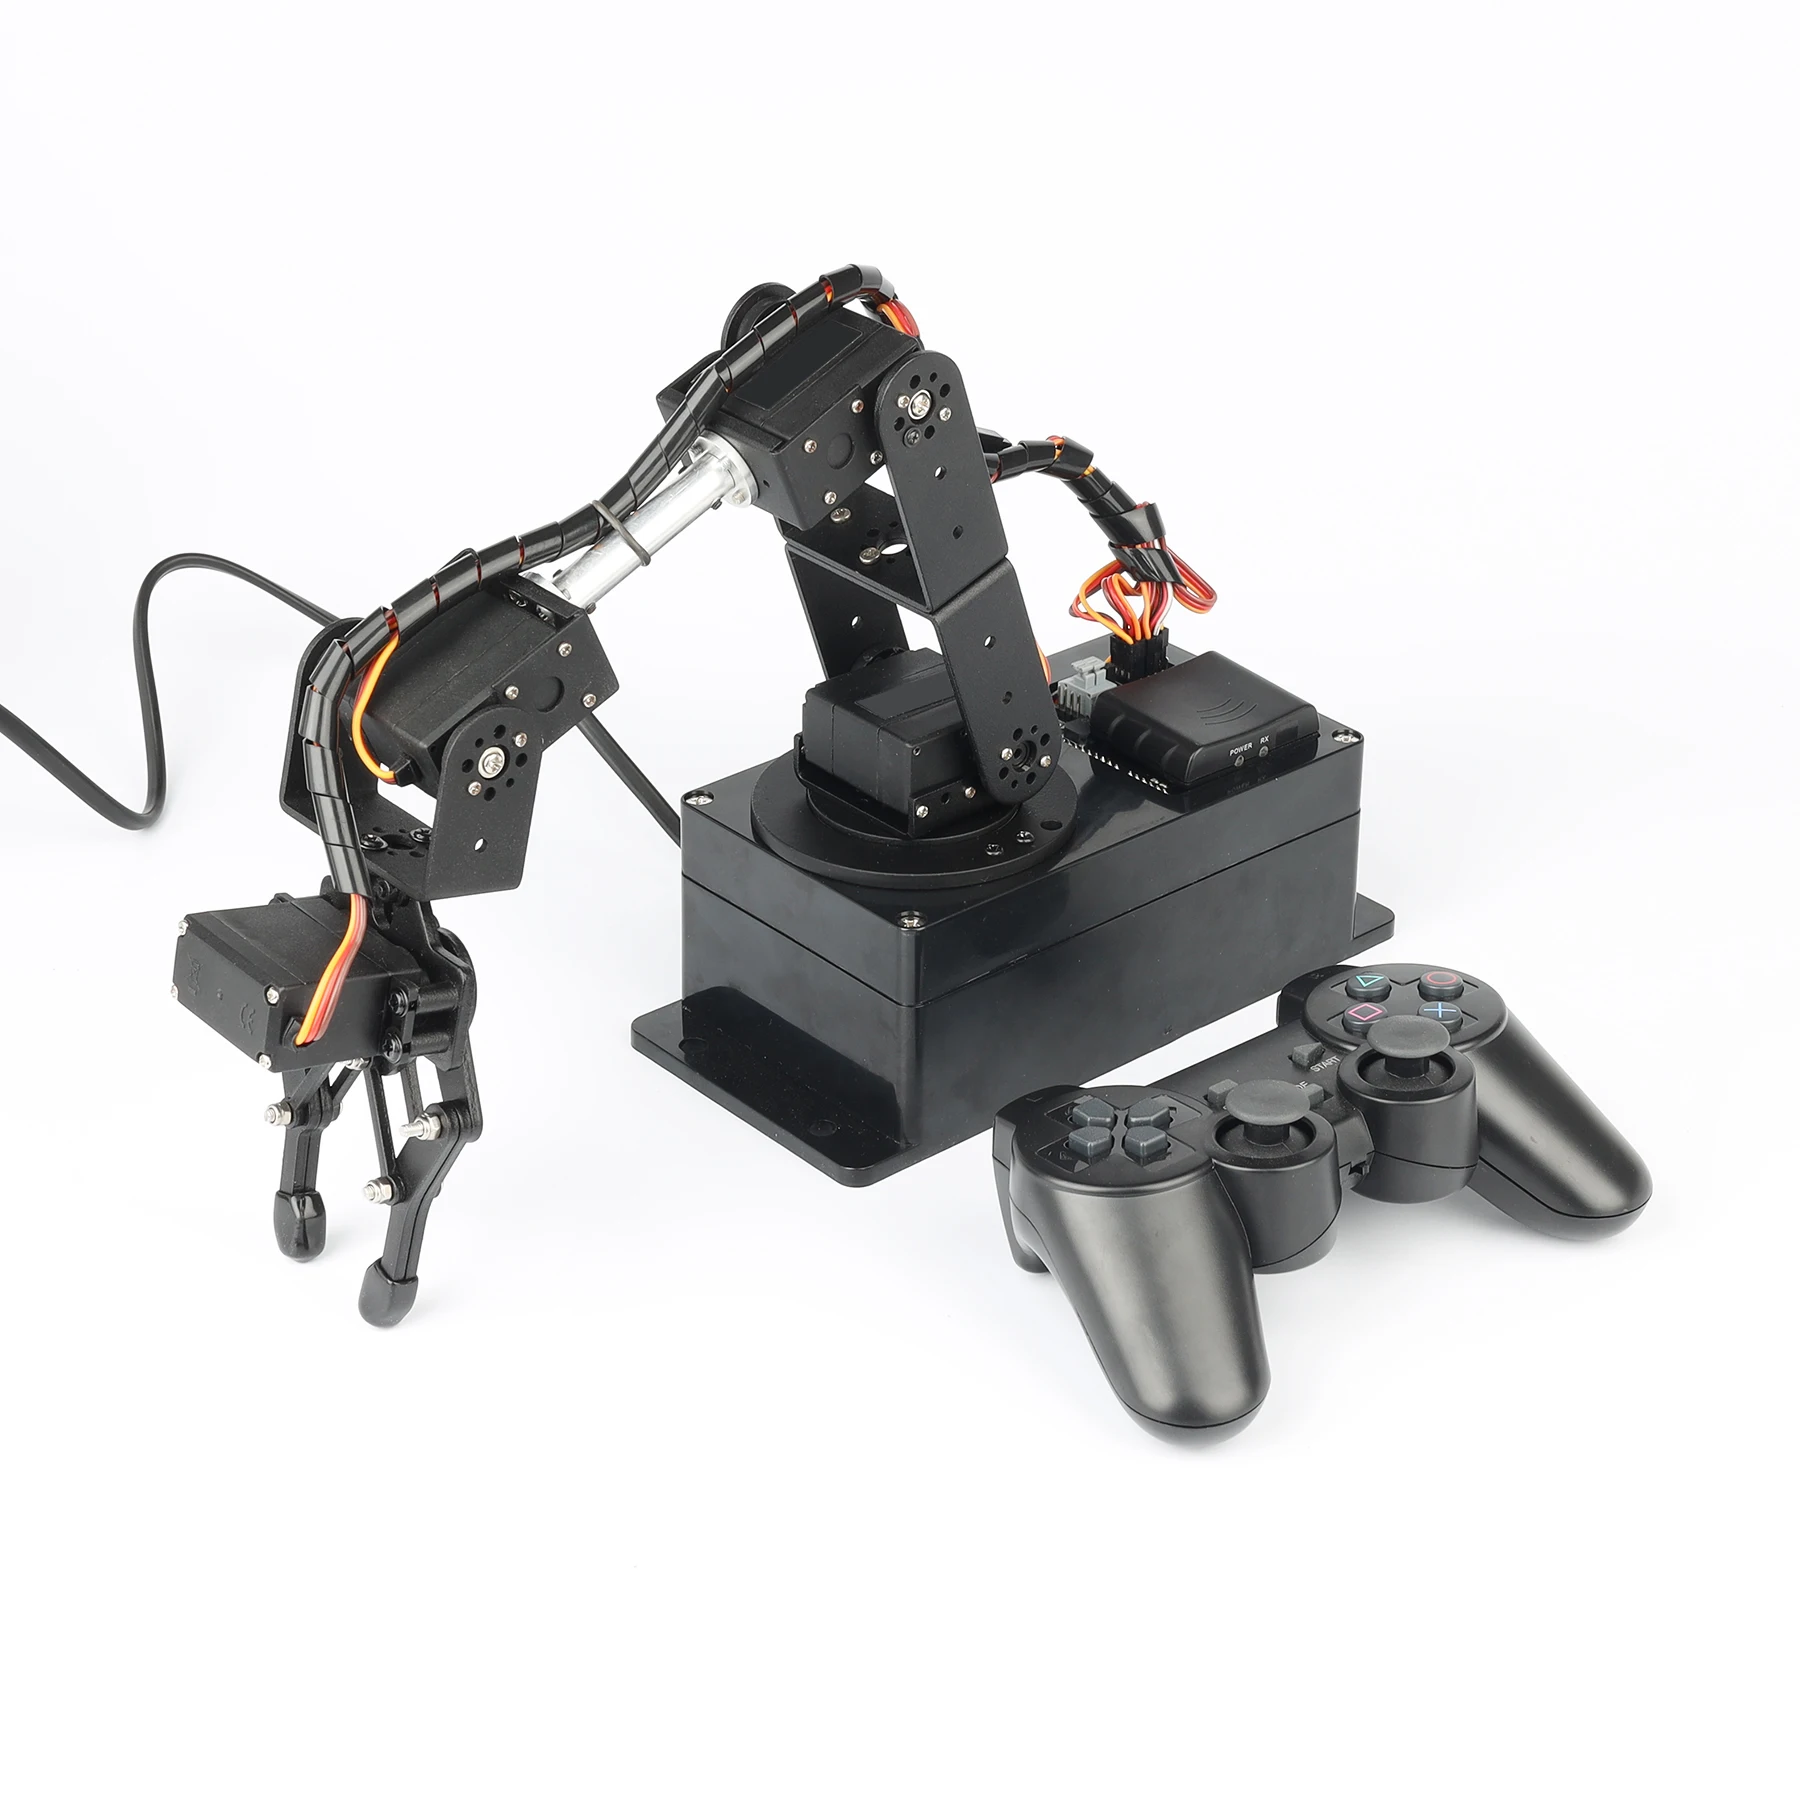 6dof Robot Arm Multi DOF Manipulator Robotics Gripper Claw PS2 Controller Digital Serco For Arduino Programming